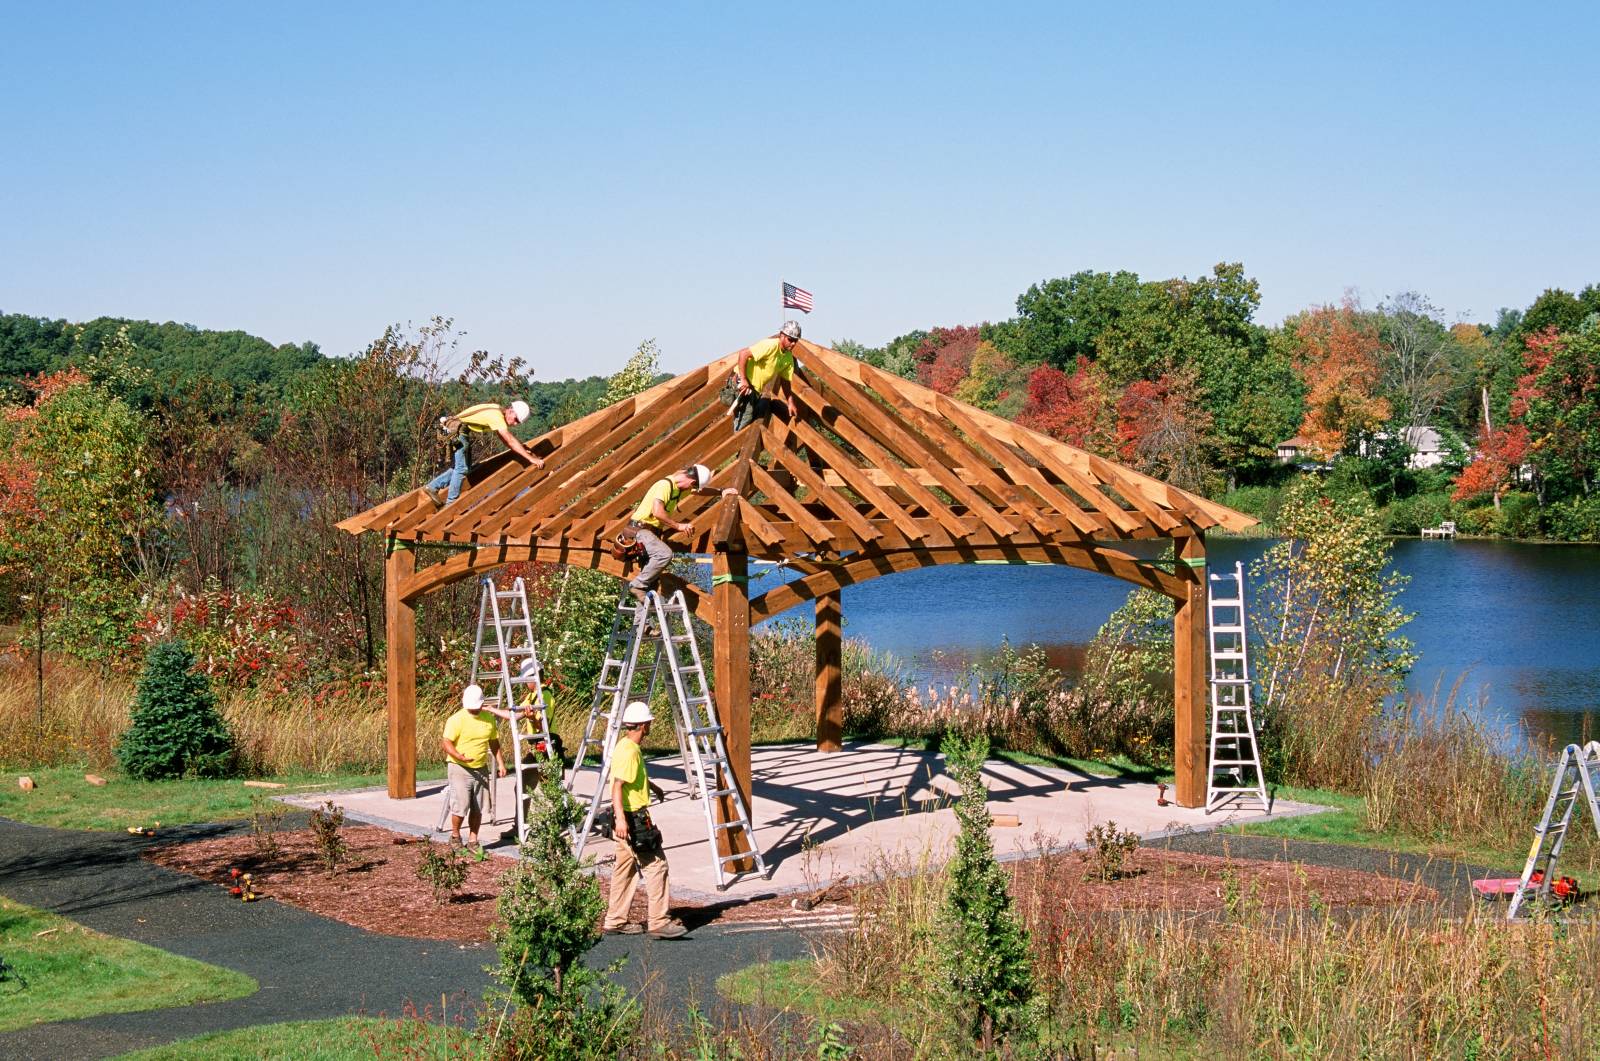 22' x 22' Jackson Timber Frame Pavilion Under Construction at Sullivan Park (Springfield MA)